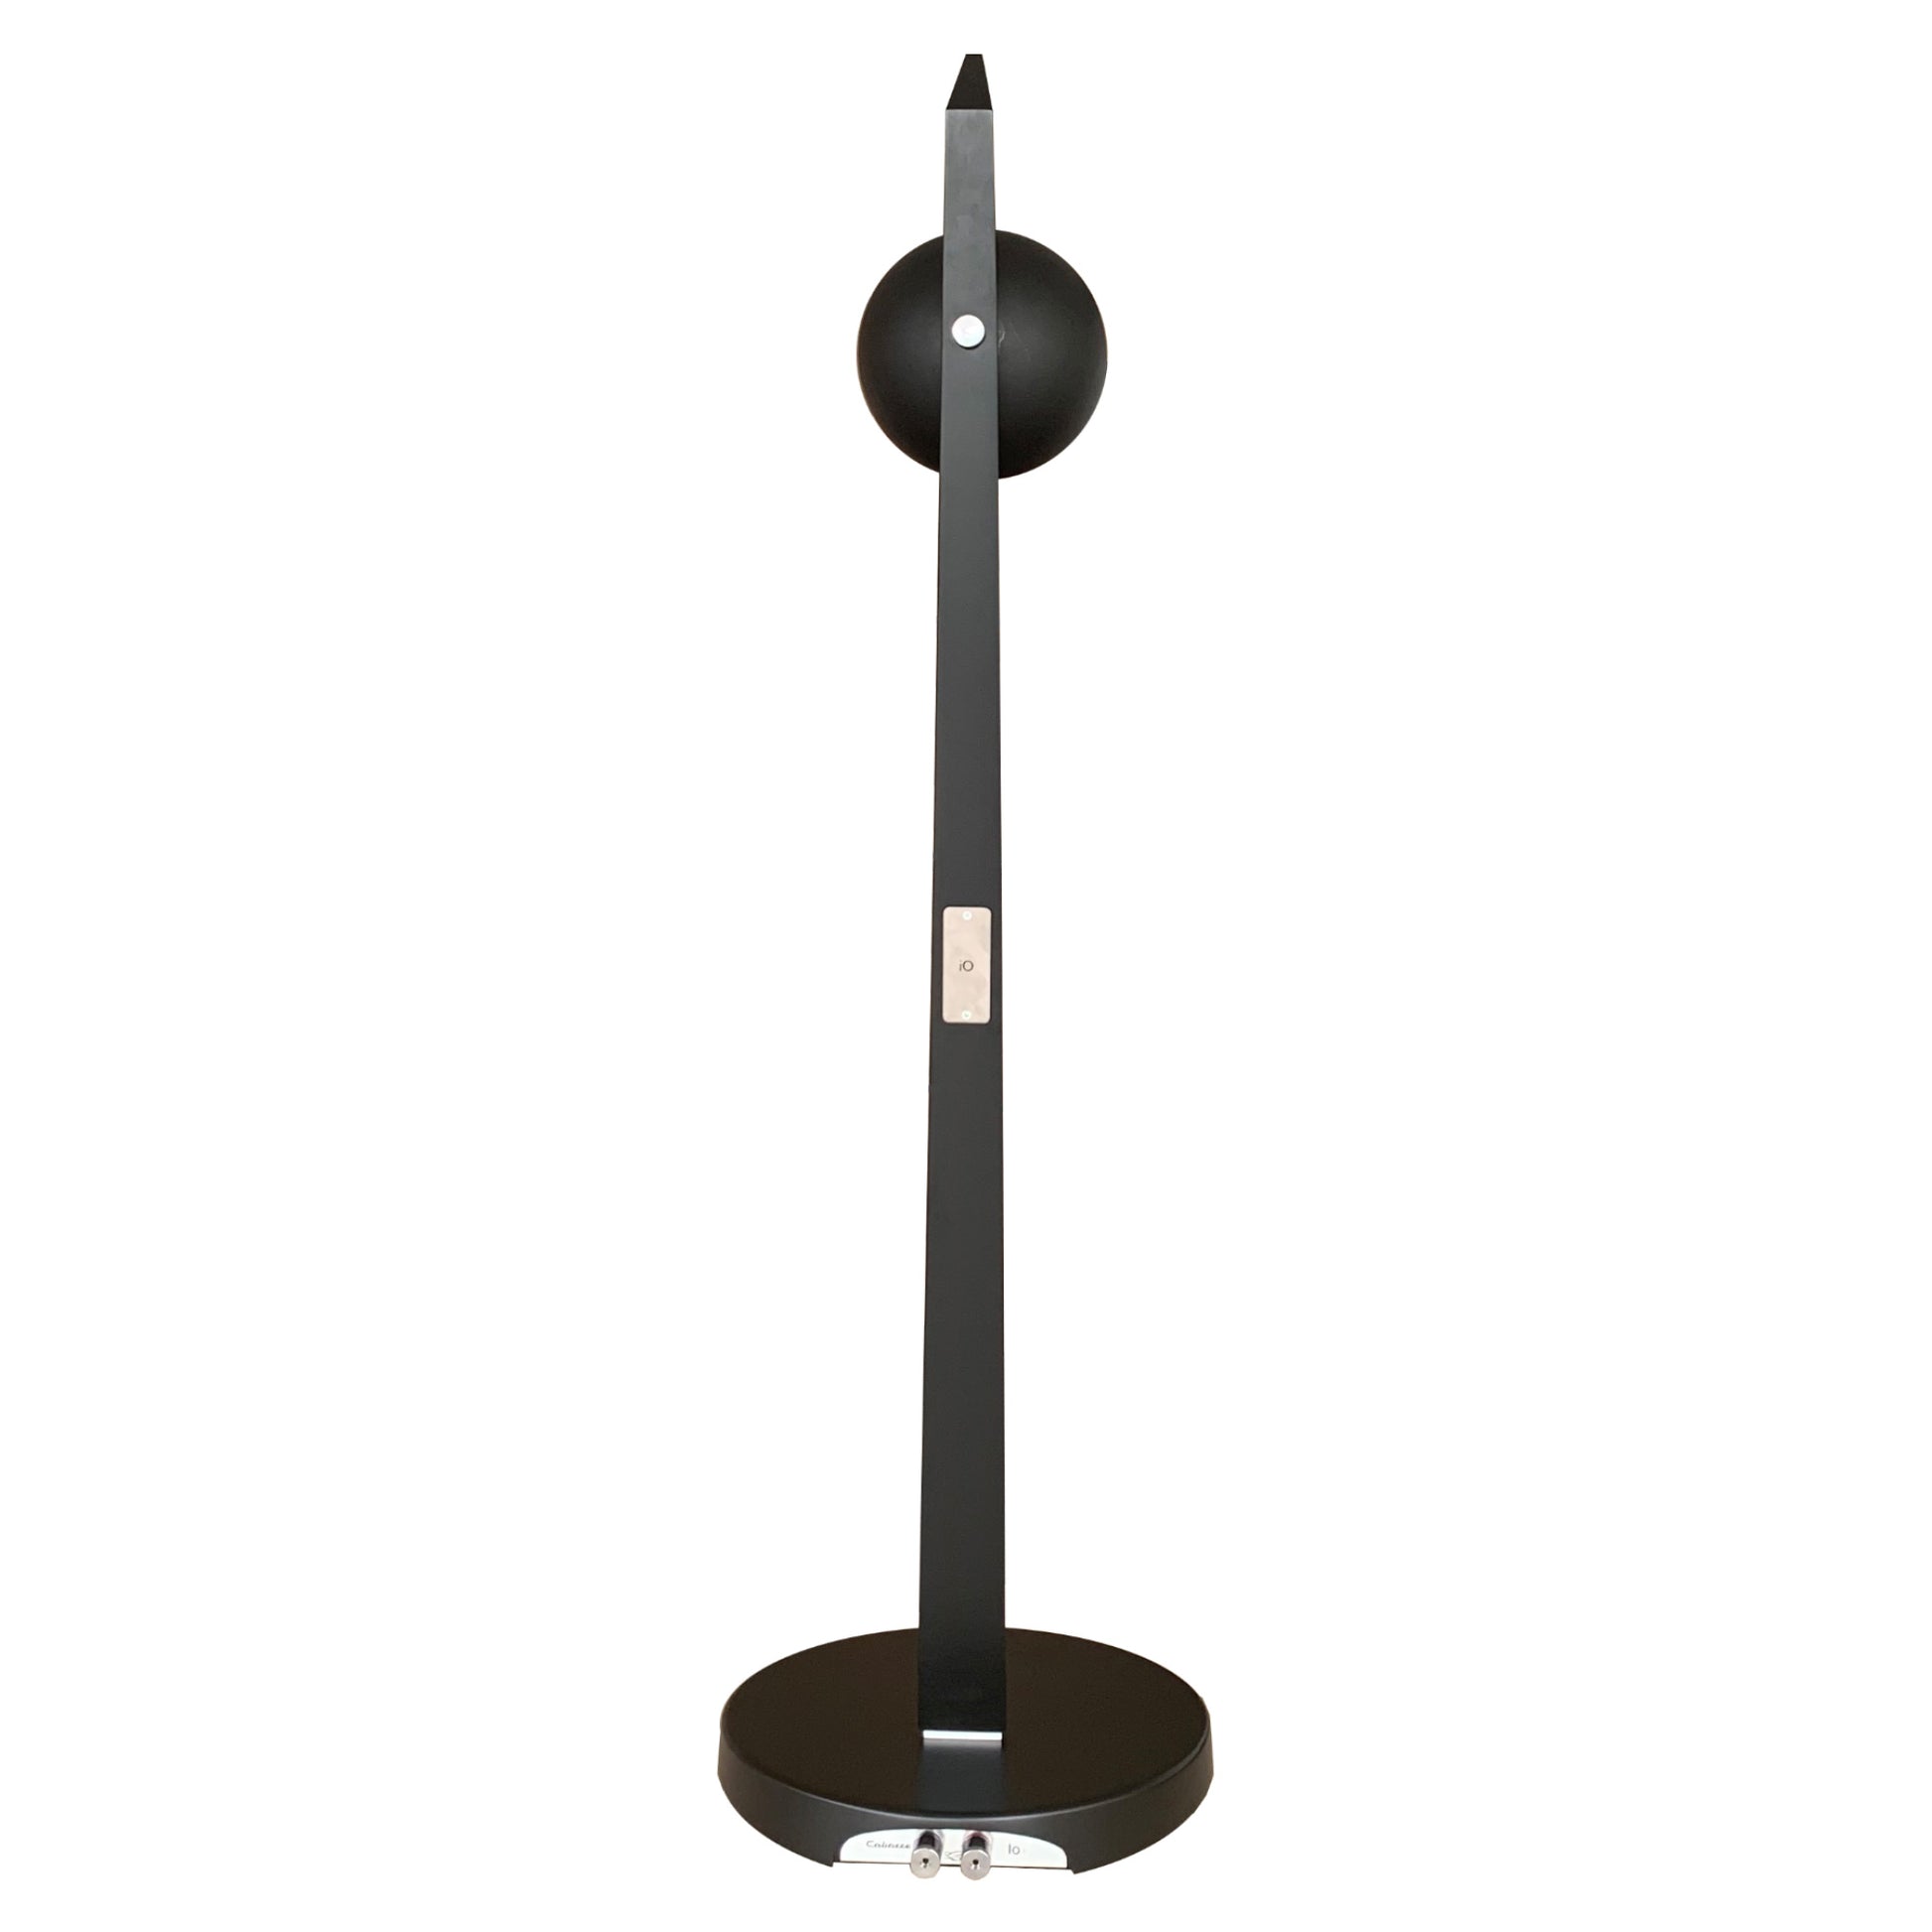 Cabasse iO3 Loudspeaker - Black with black stand connectors